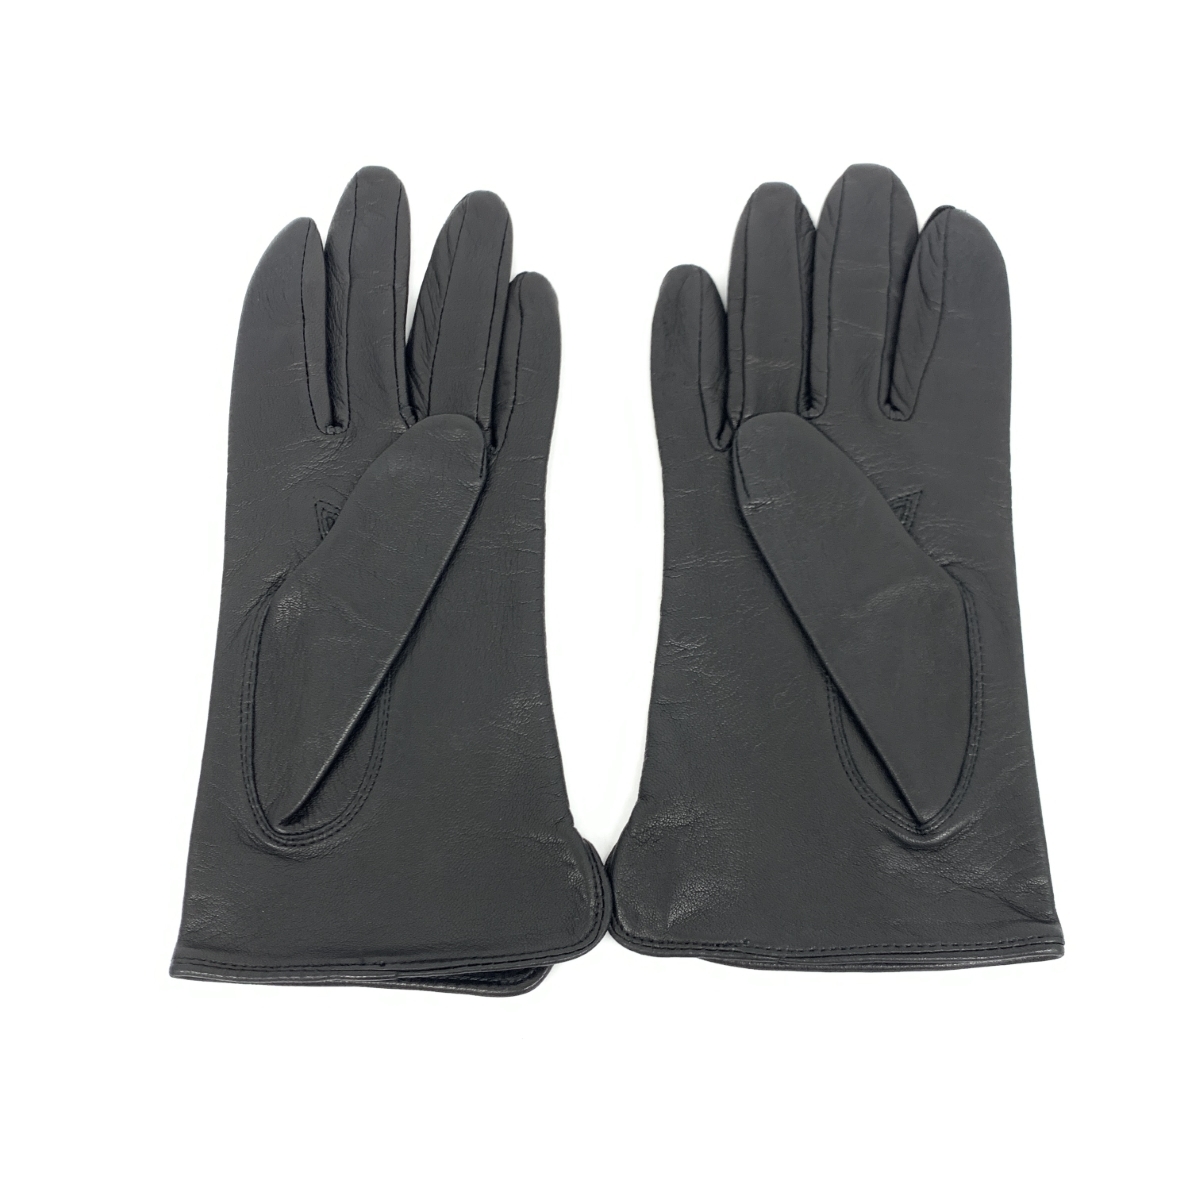 ◆MOSCHINO モスキーノ 手袋 ◆ ブラック レザー スマイリー レディース 手袋 glove グローブ 服飾小物の画像3